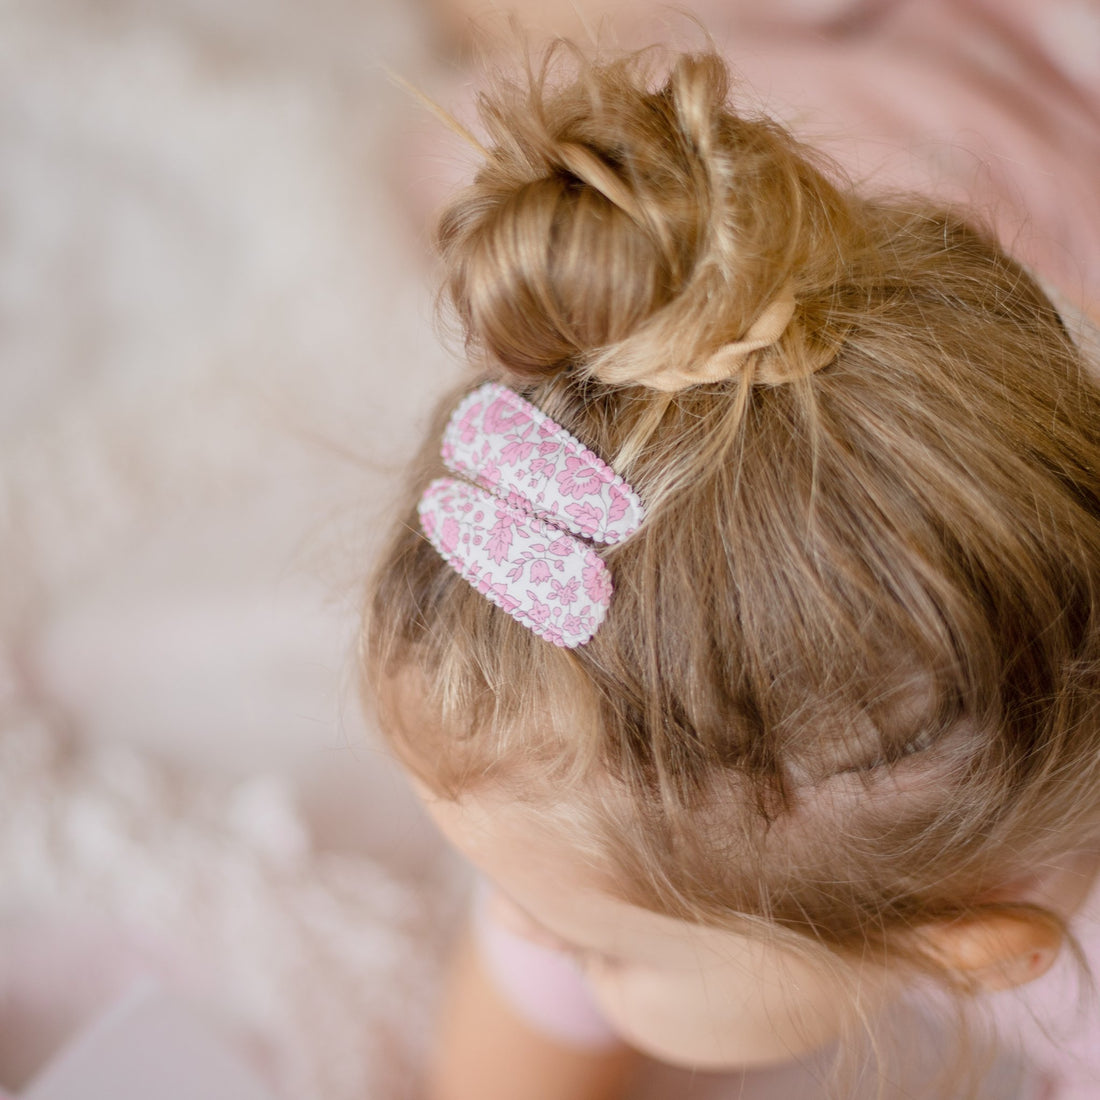 dainty dulcie pink floral fabric girls hair clips